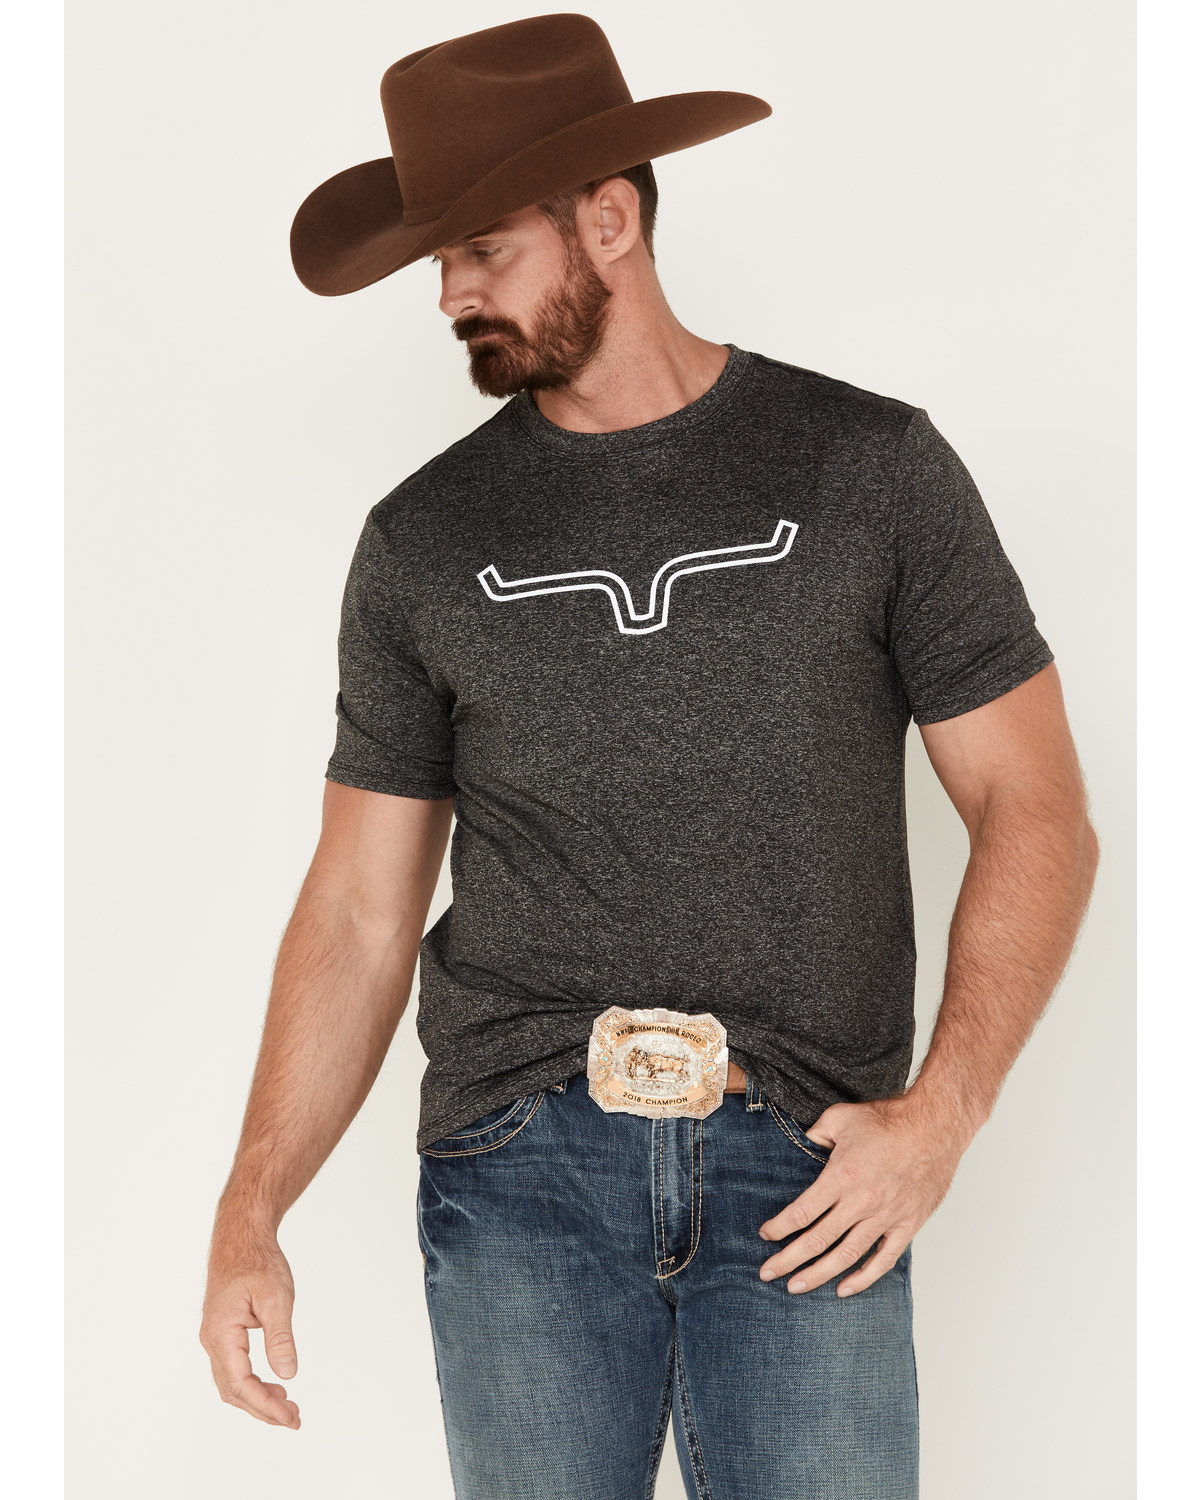 Kimes Ranch Men's Outlier Tech Logo Graphic T-Shirt